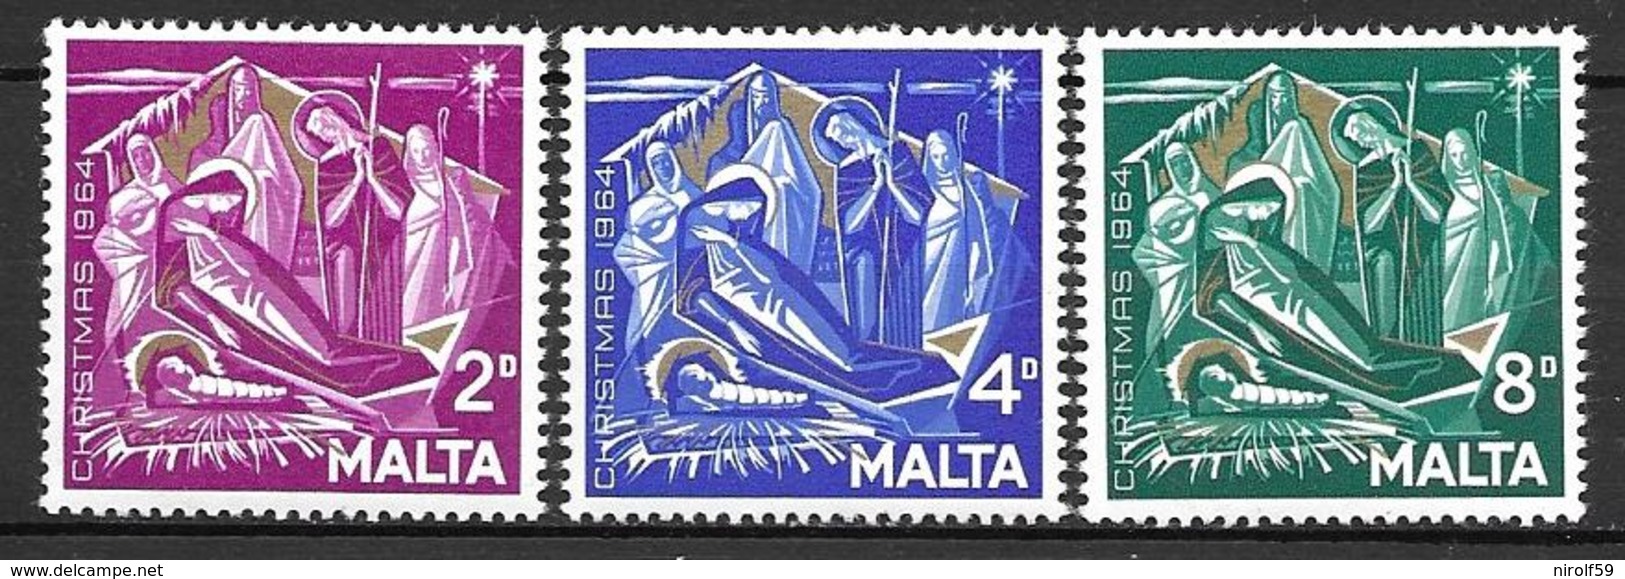 Malta 1964 - Christmas - Malta